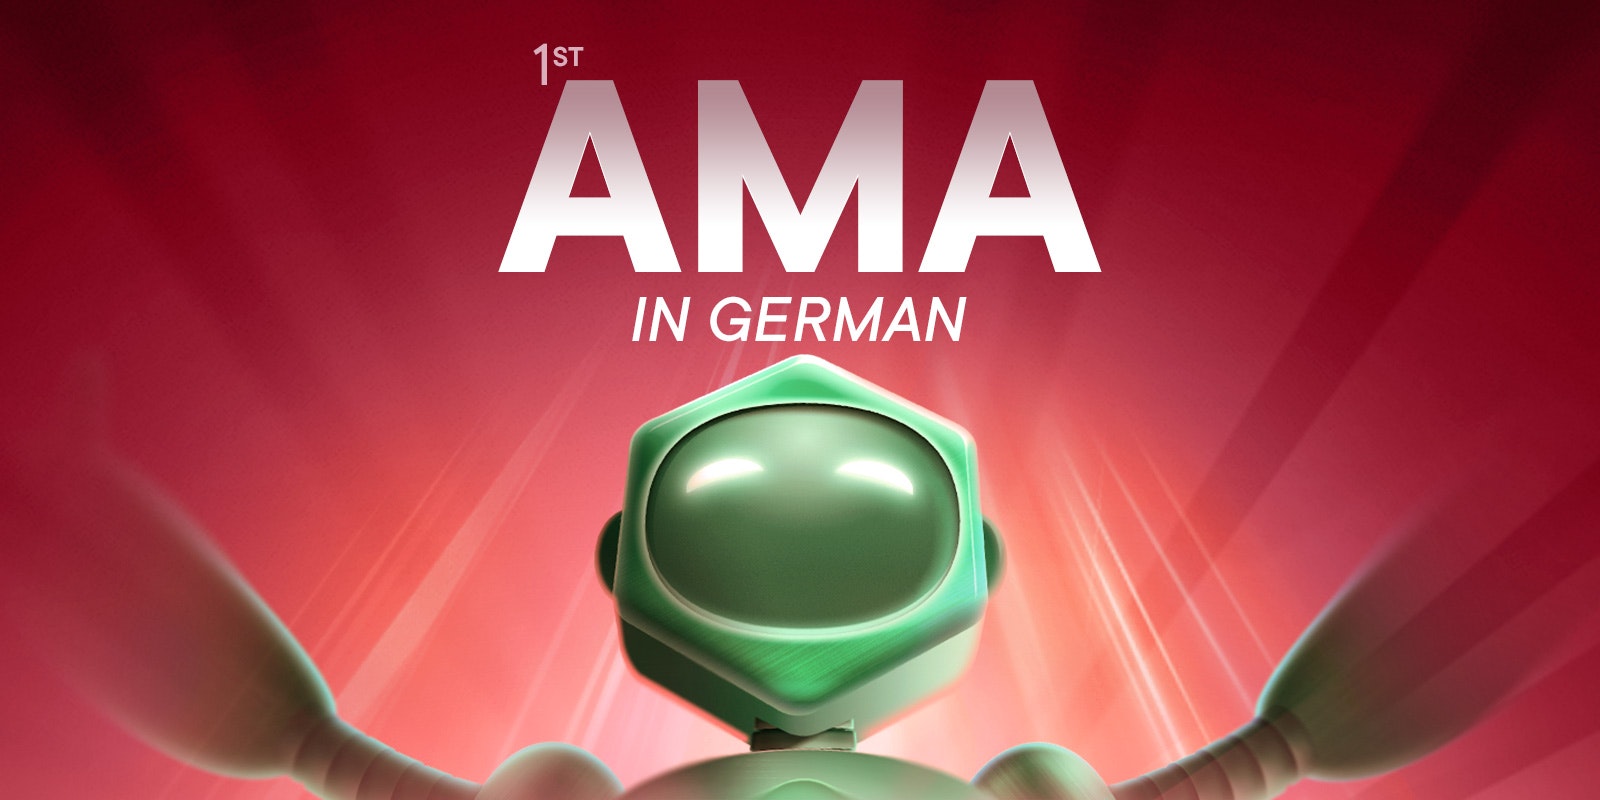 SwissBorg’s first German AMA